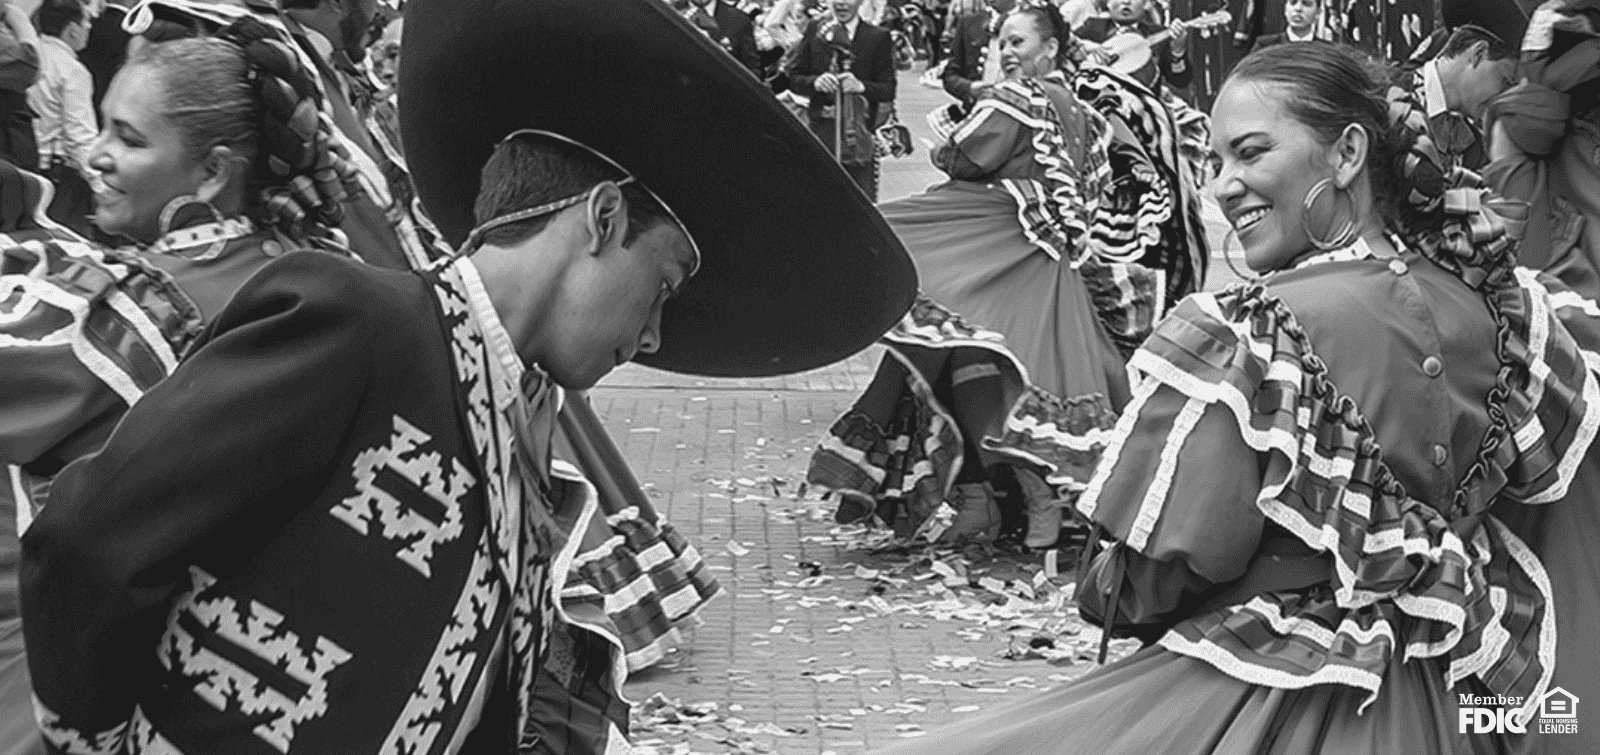 Hispanic heritage month image of traditionally dressed Hispanic dancers